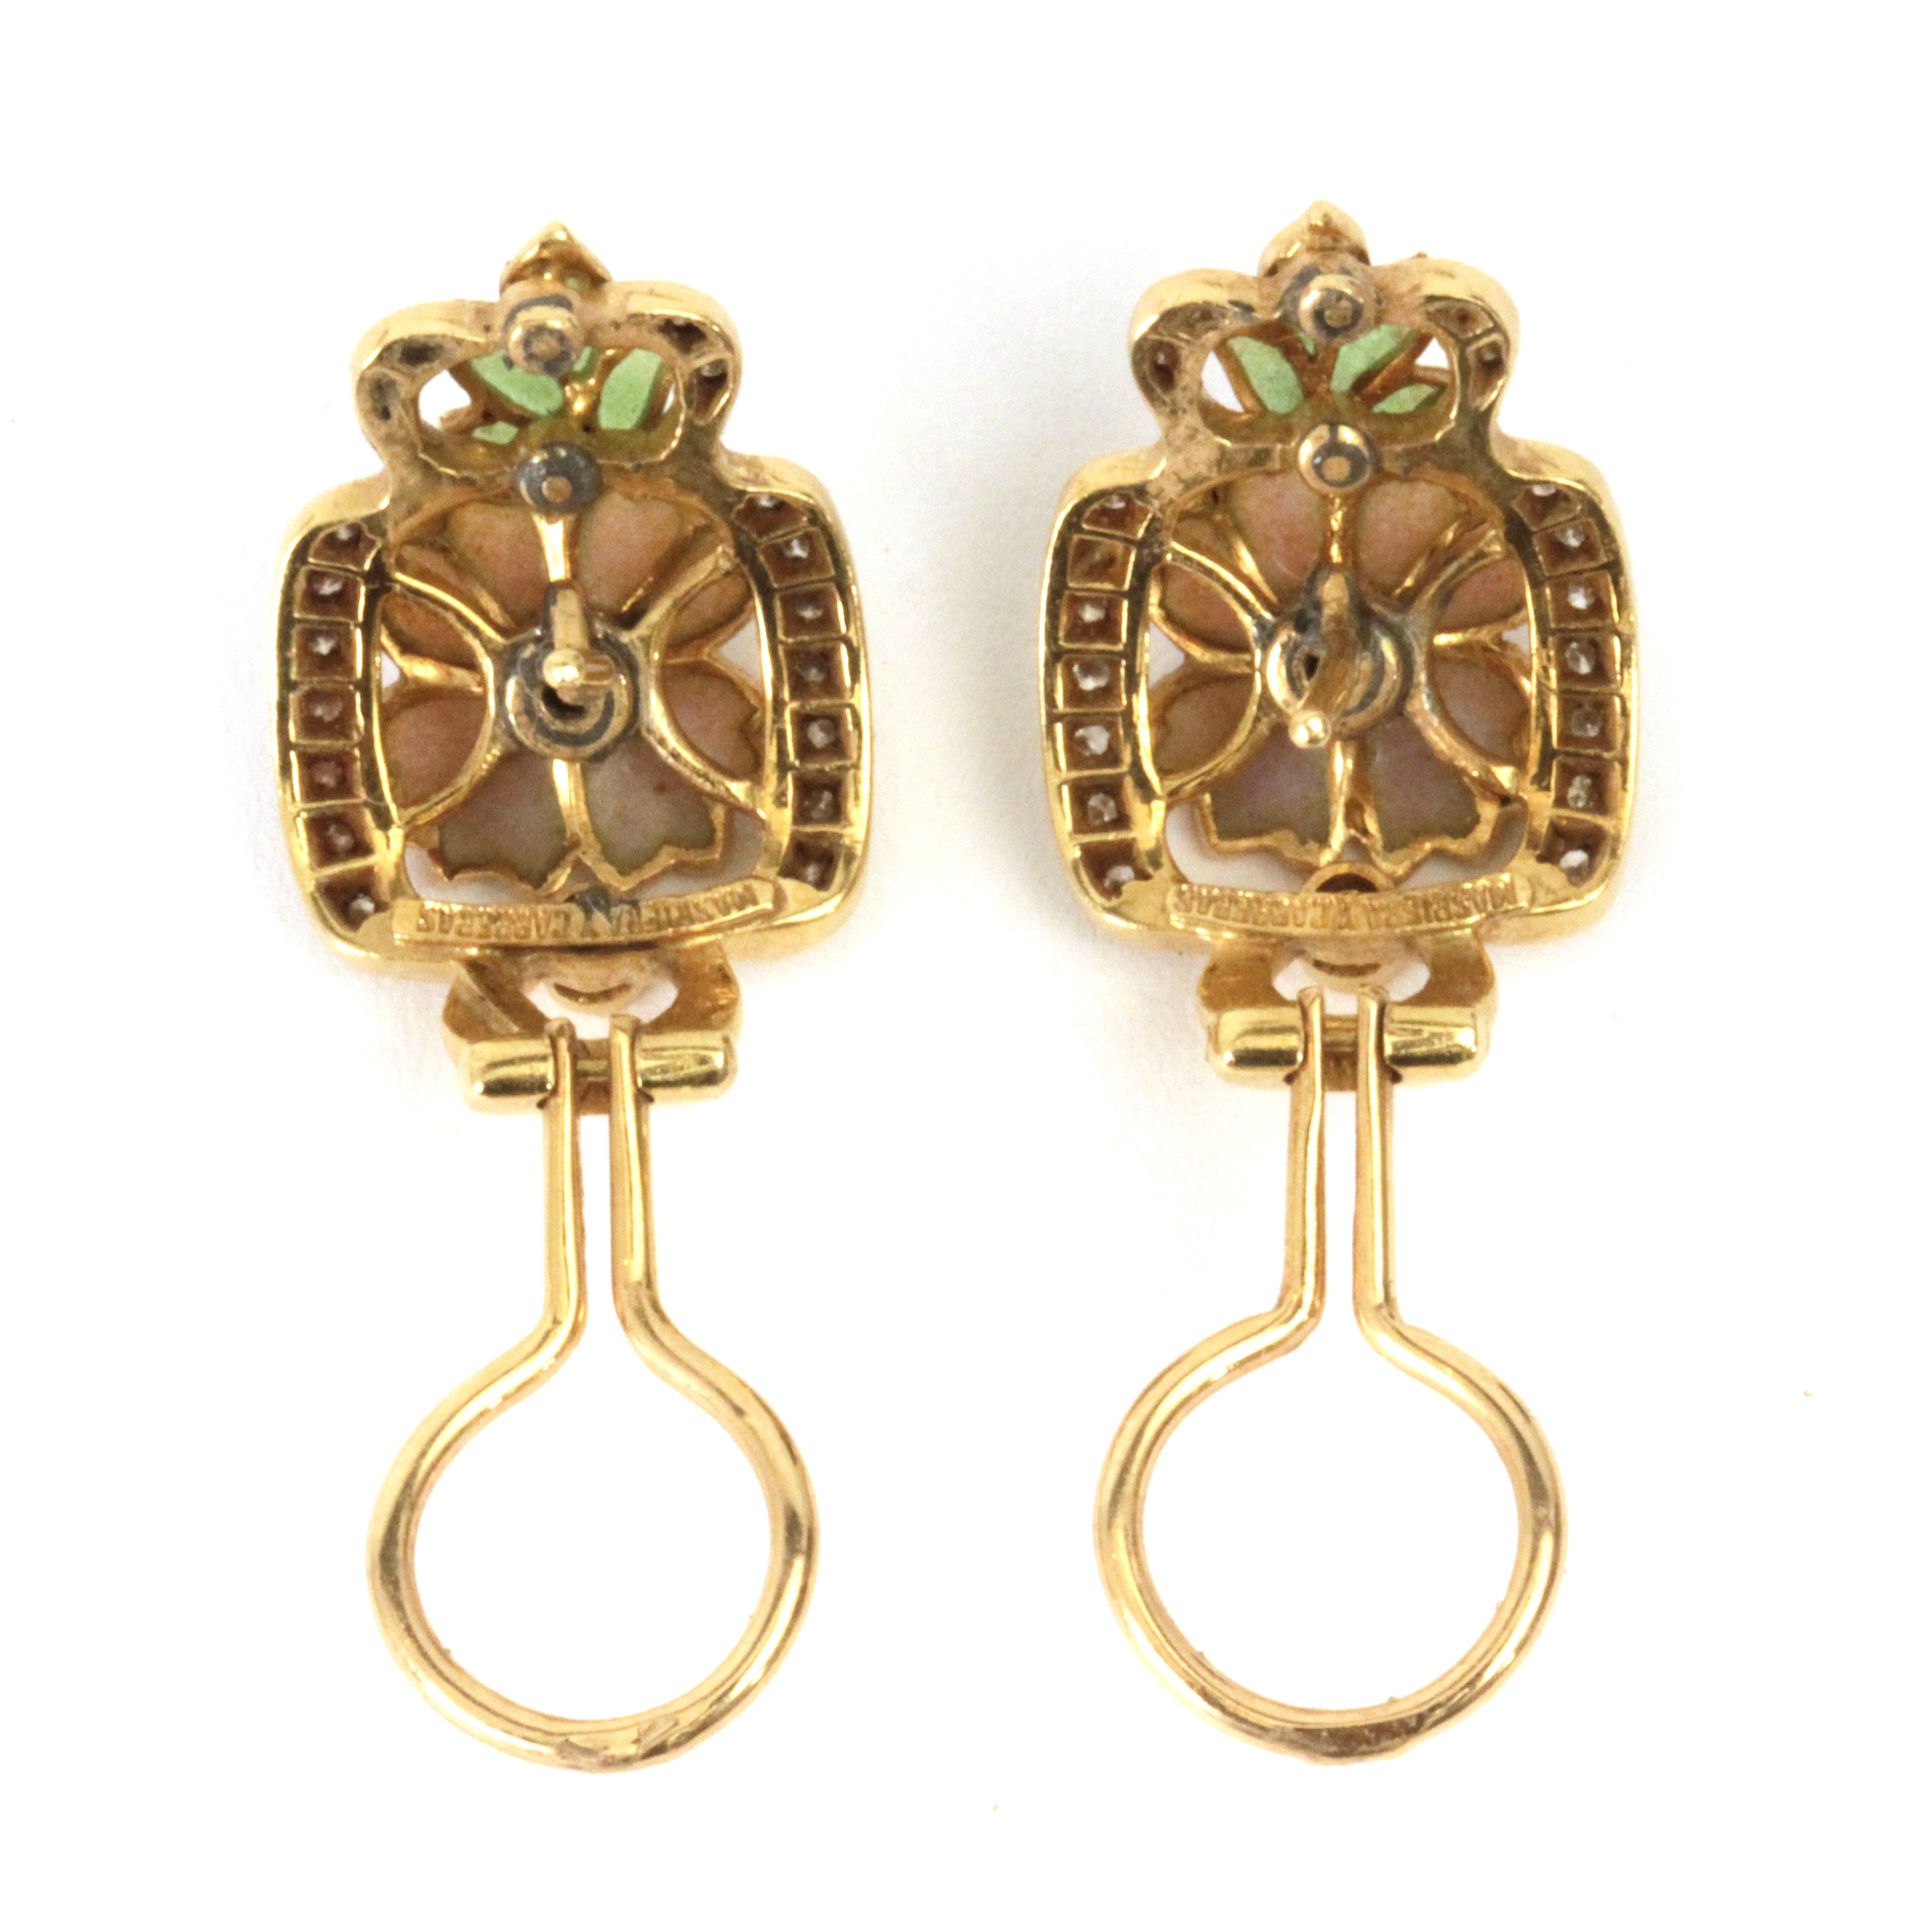 Bagués-Masriera. An Art Nouveau style earrings - Image 2 of 2